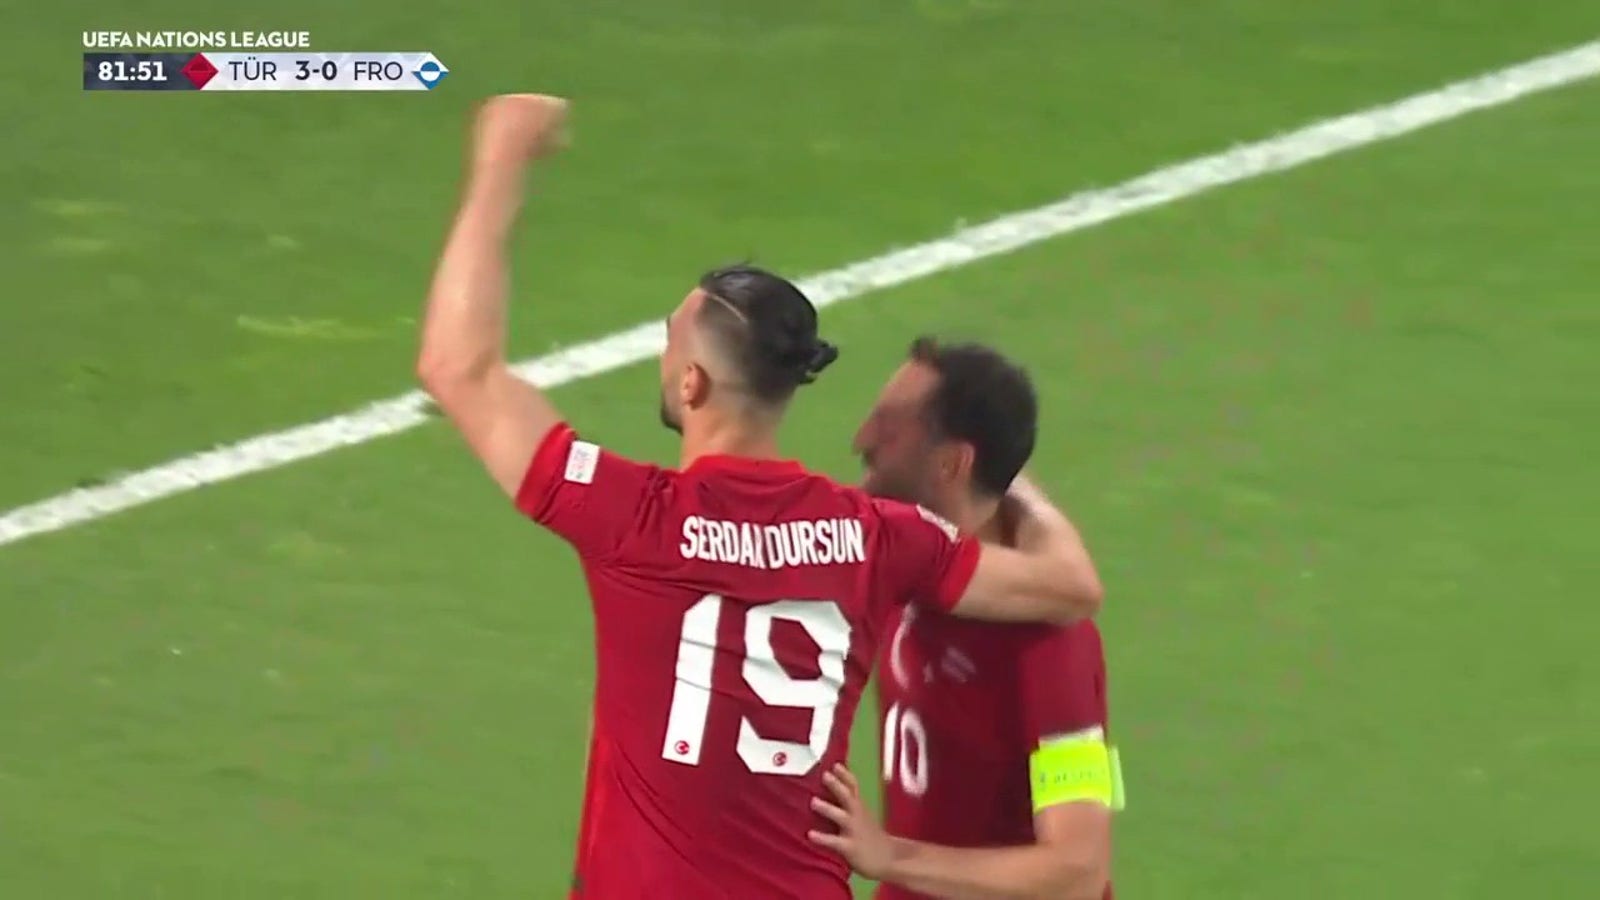 Serdar Dursun's towering header fuels Turkey's 3-0 lead vs. Faroe Islands